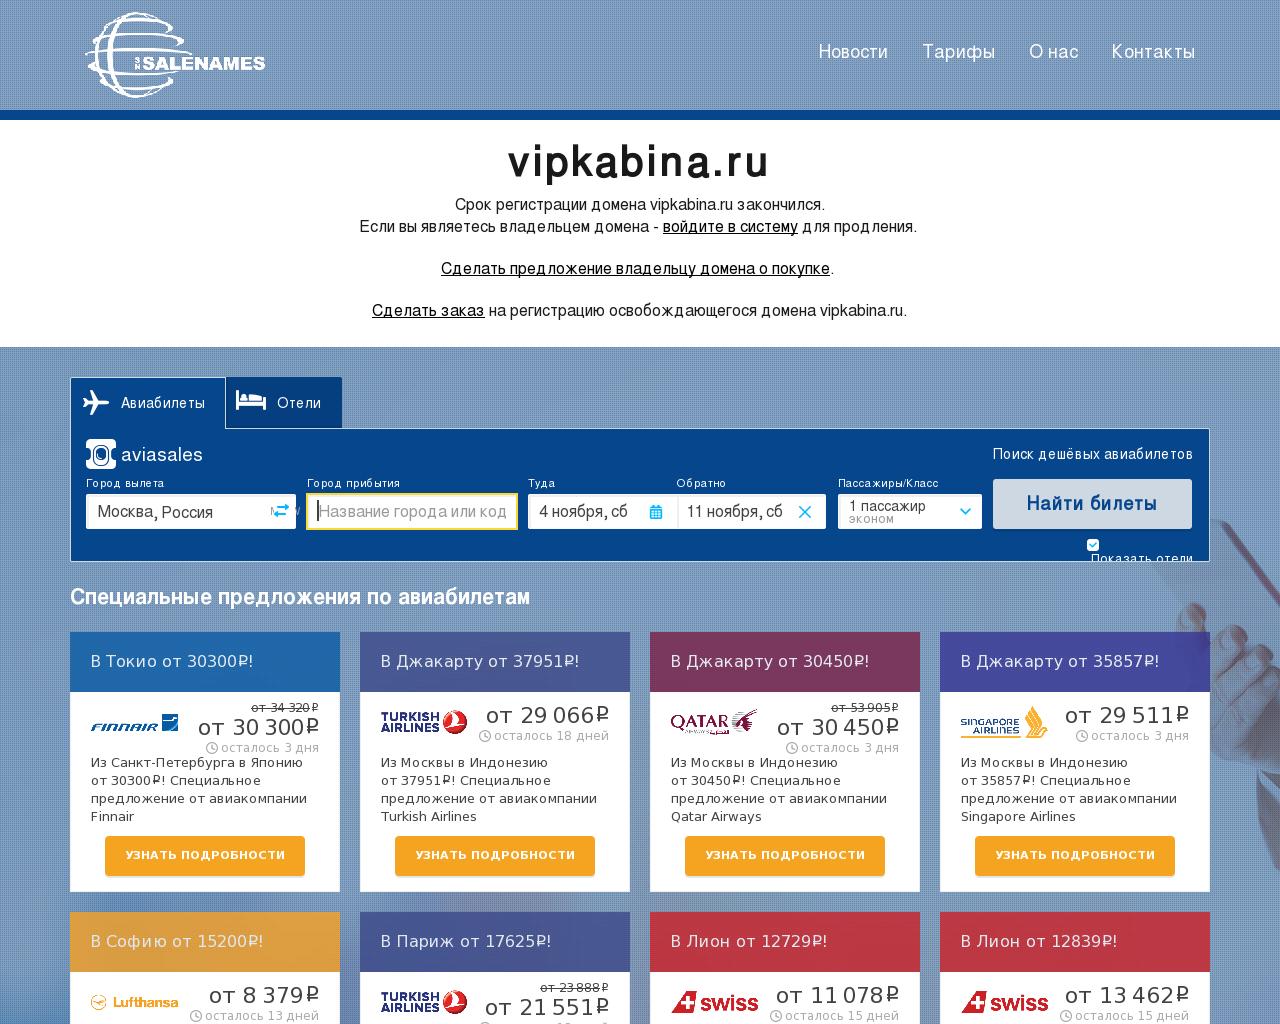 Изображение сайта vipkabina.ru в разрешении 1280x1024